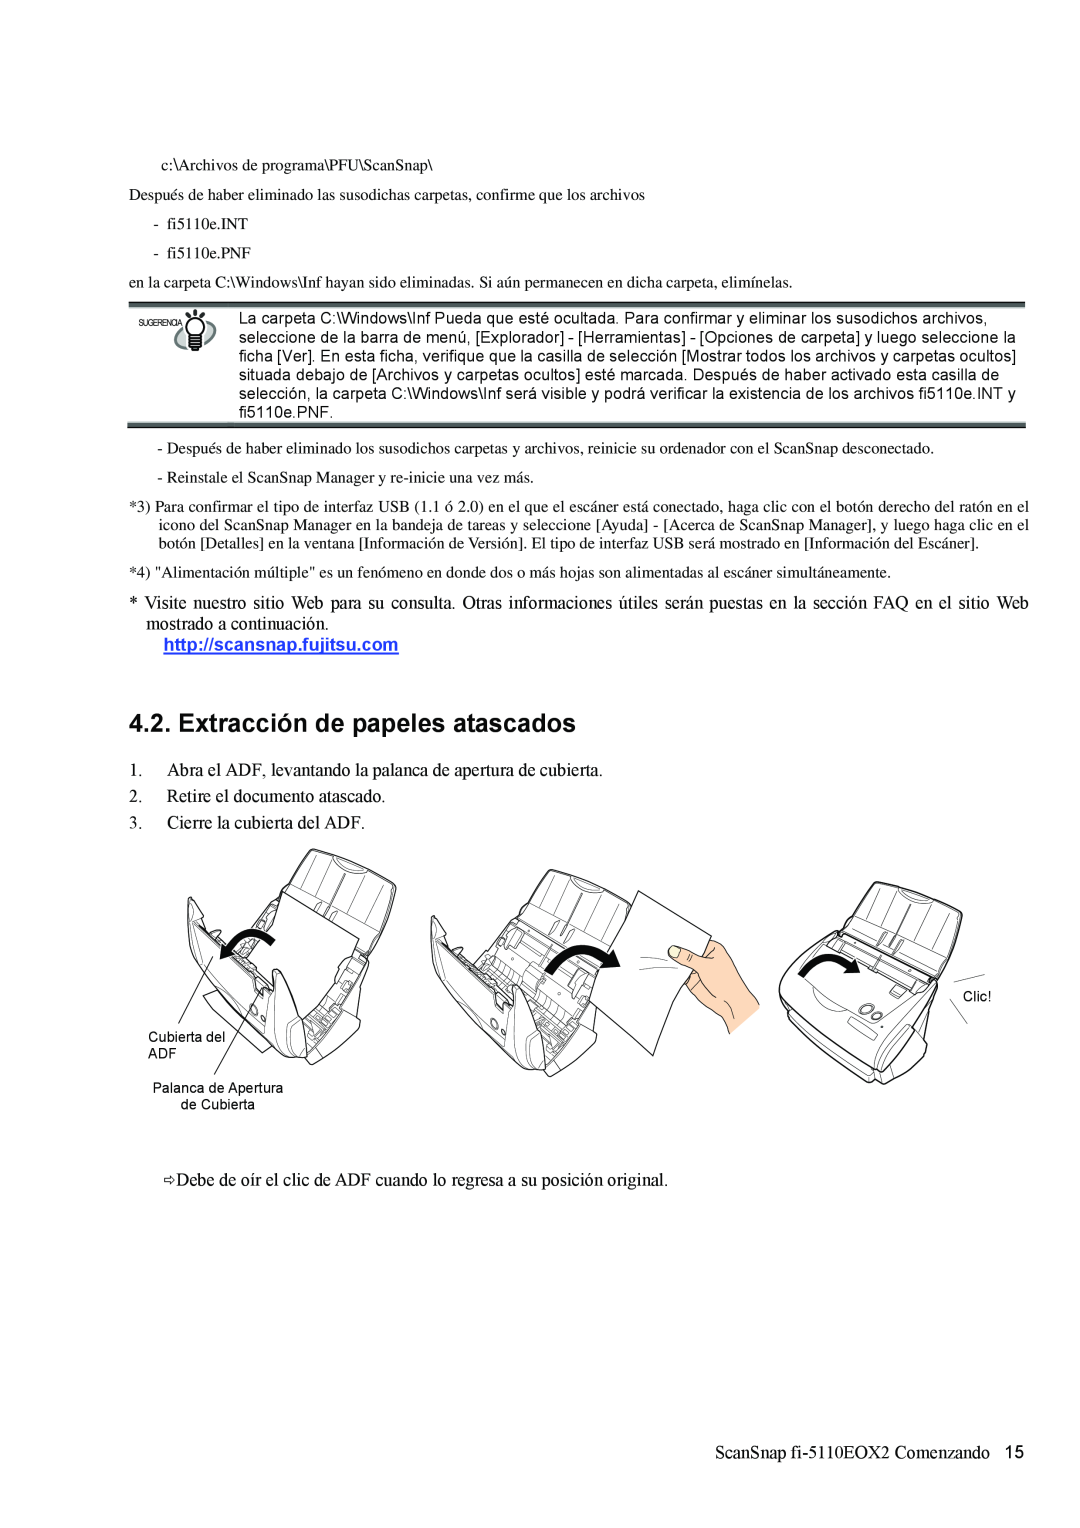 Fujitsu fi-5110EOX2 manual Extracción de papeles atascados, http//scansnap.fujitsu.com 